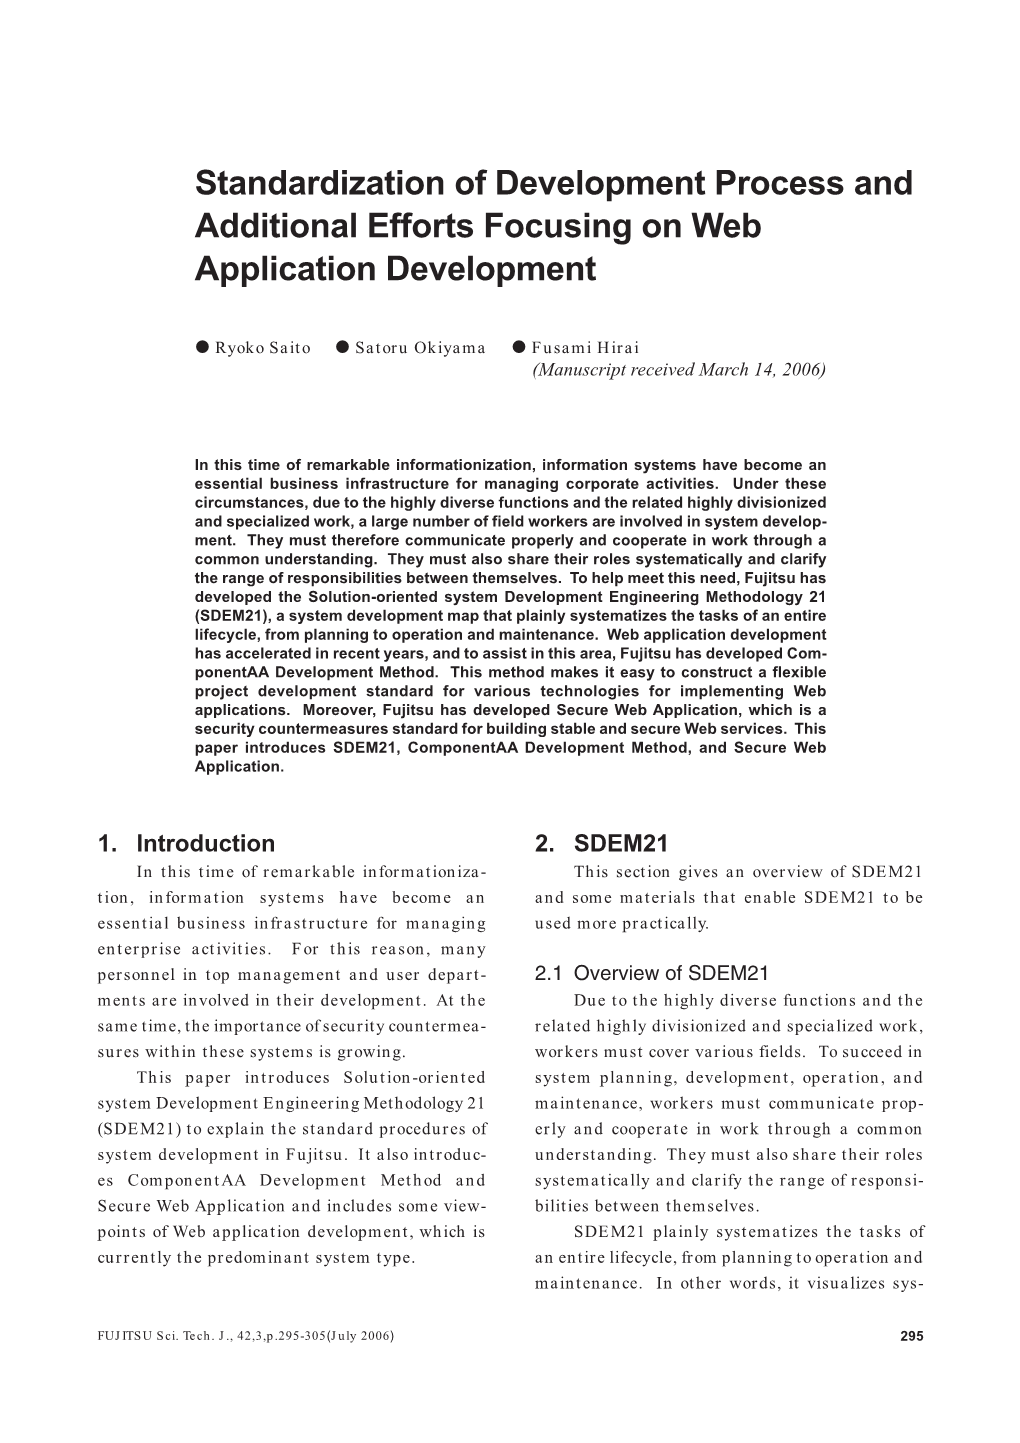 Standardization of Development Process and Additional Efforts Focusing on Web Application Development